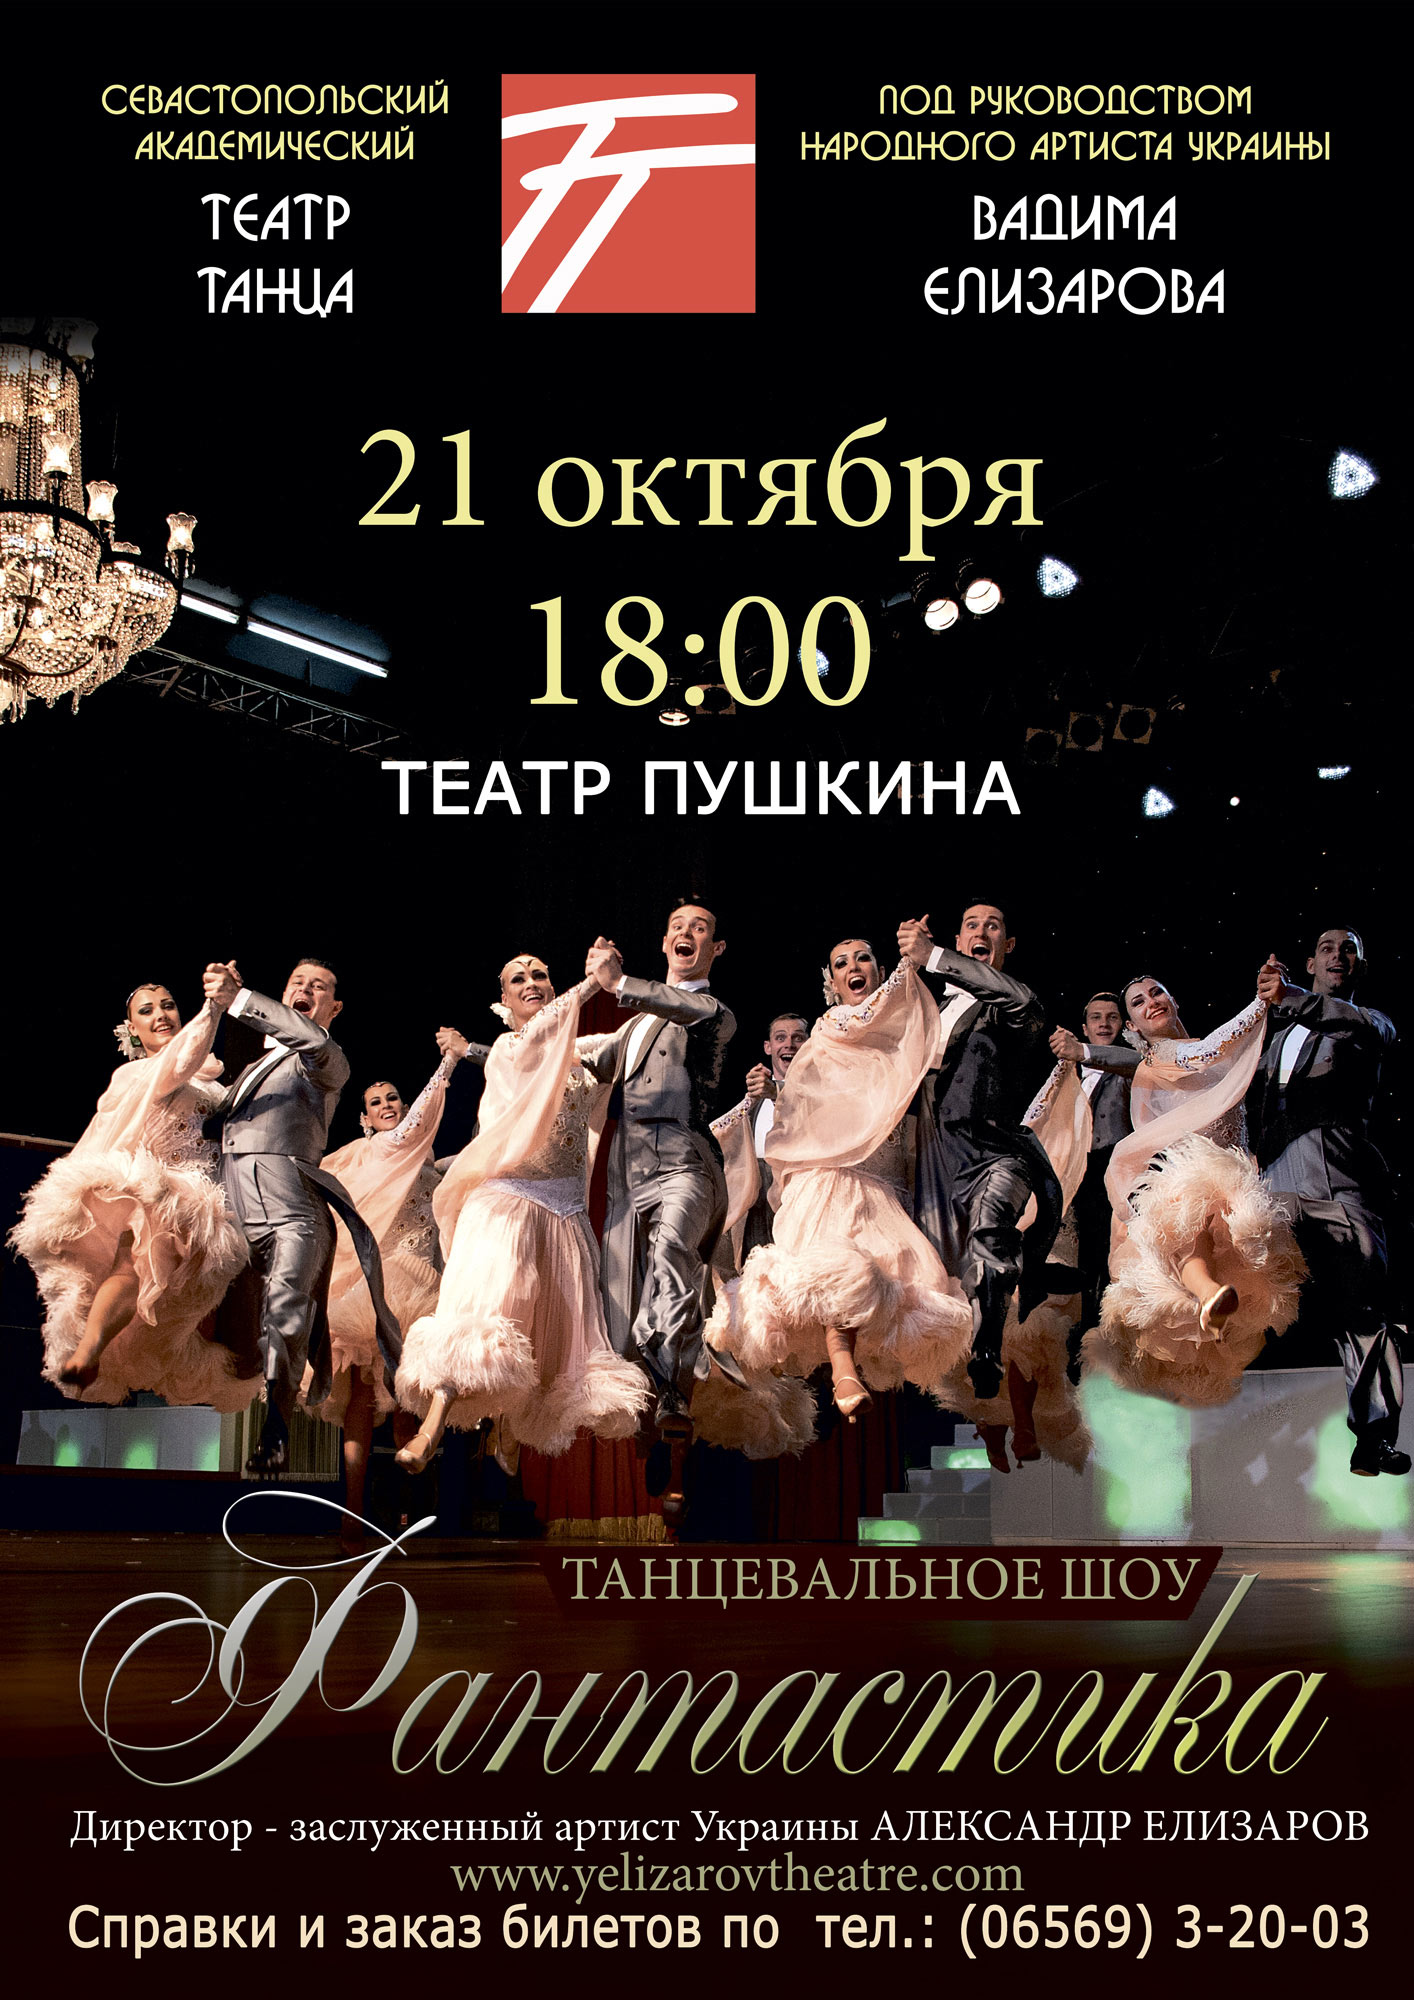 Театр танца Елизарова Севастополь. Театр танца Вадима Елизарова Севастополь афиша цена билета.